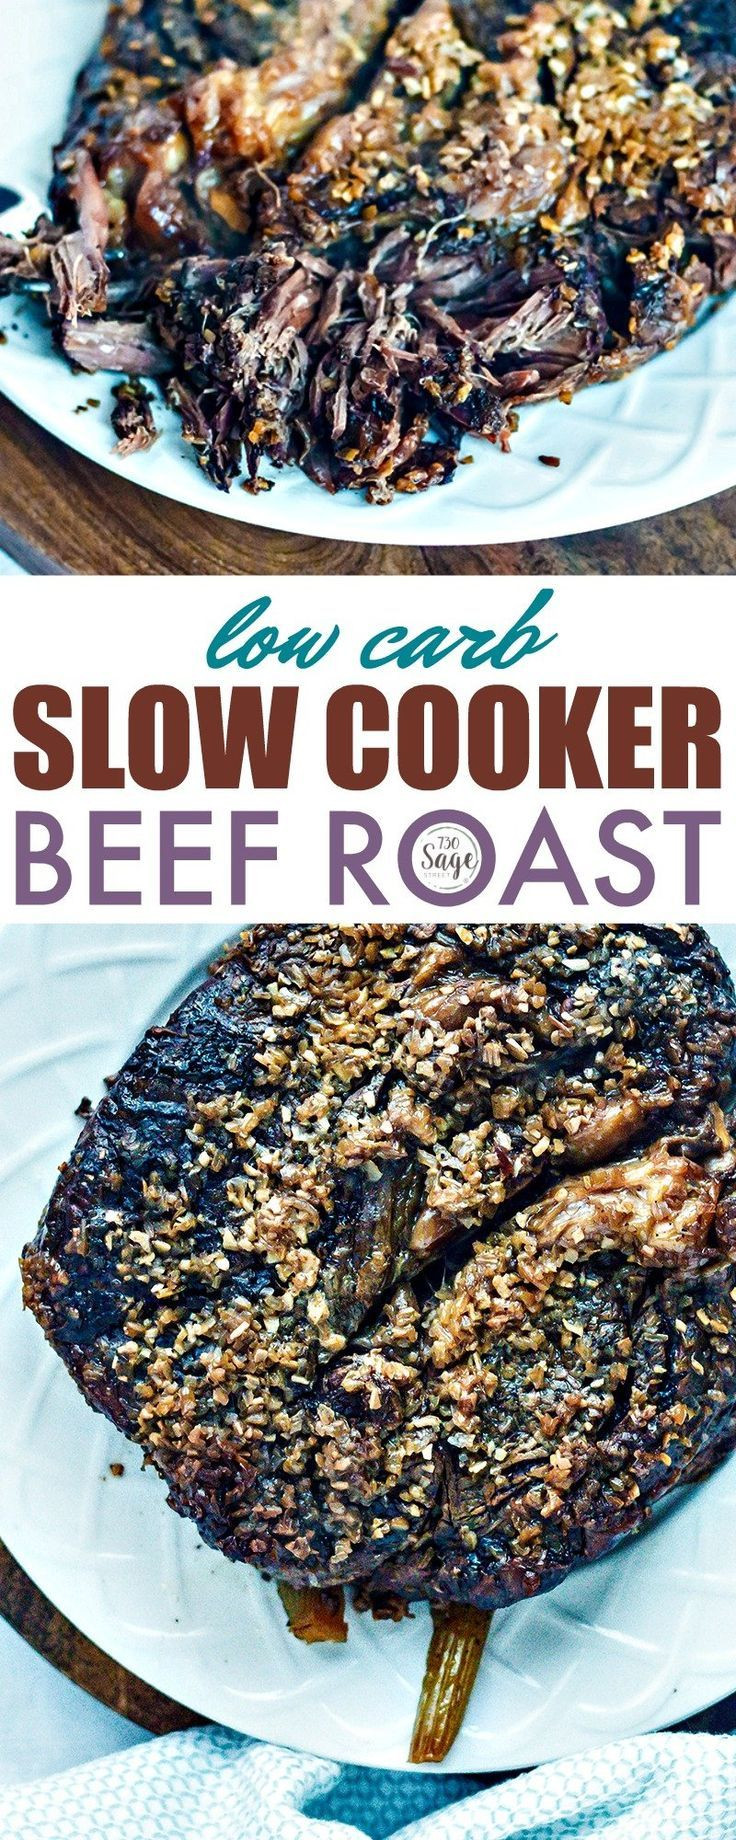 Beef Chuck Roast Recipes Crockpot Keto
 Low Carb Chuck Roast Slow Cooker Roast Beef keto